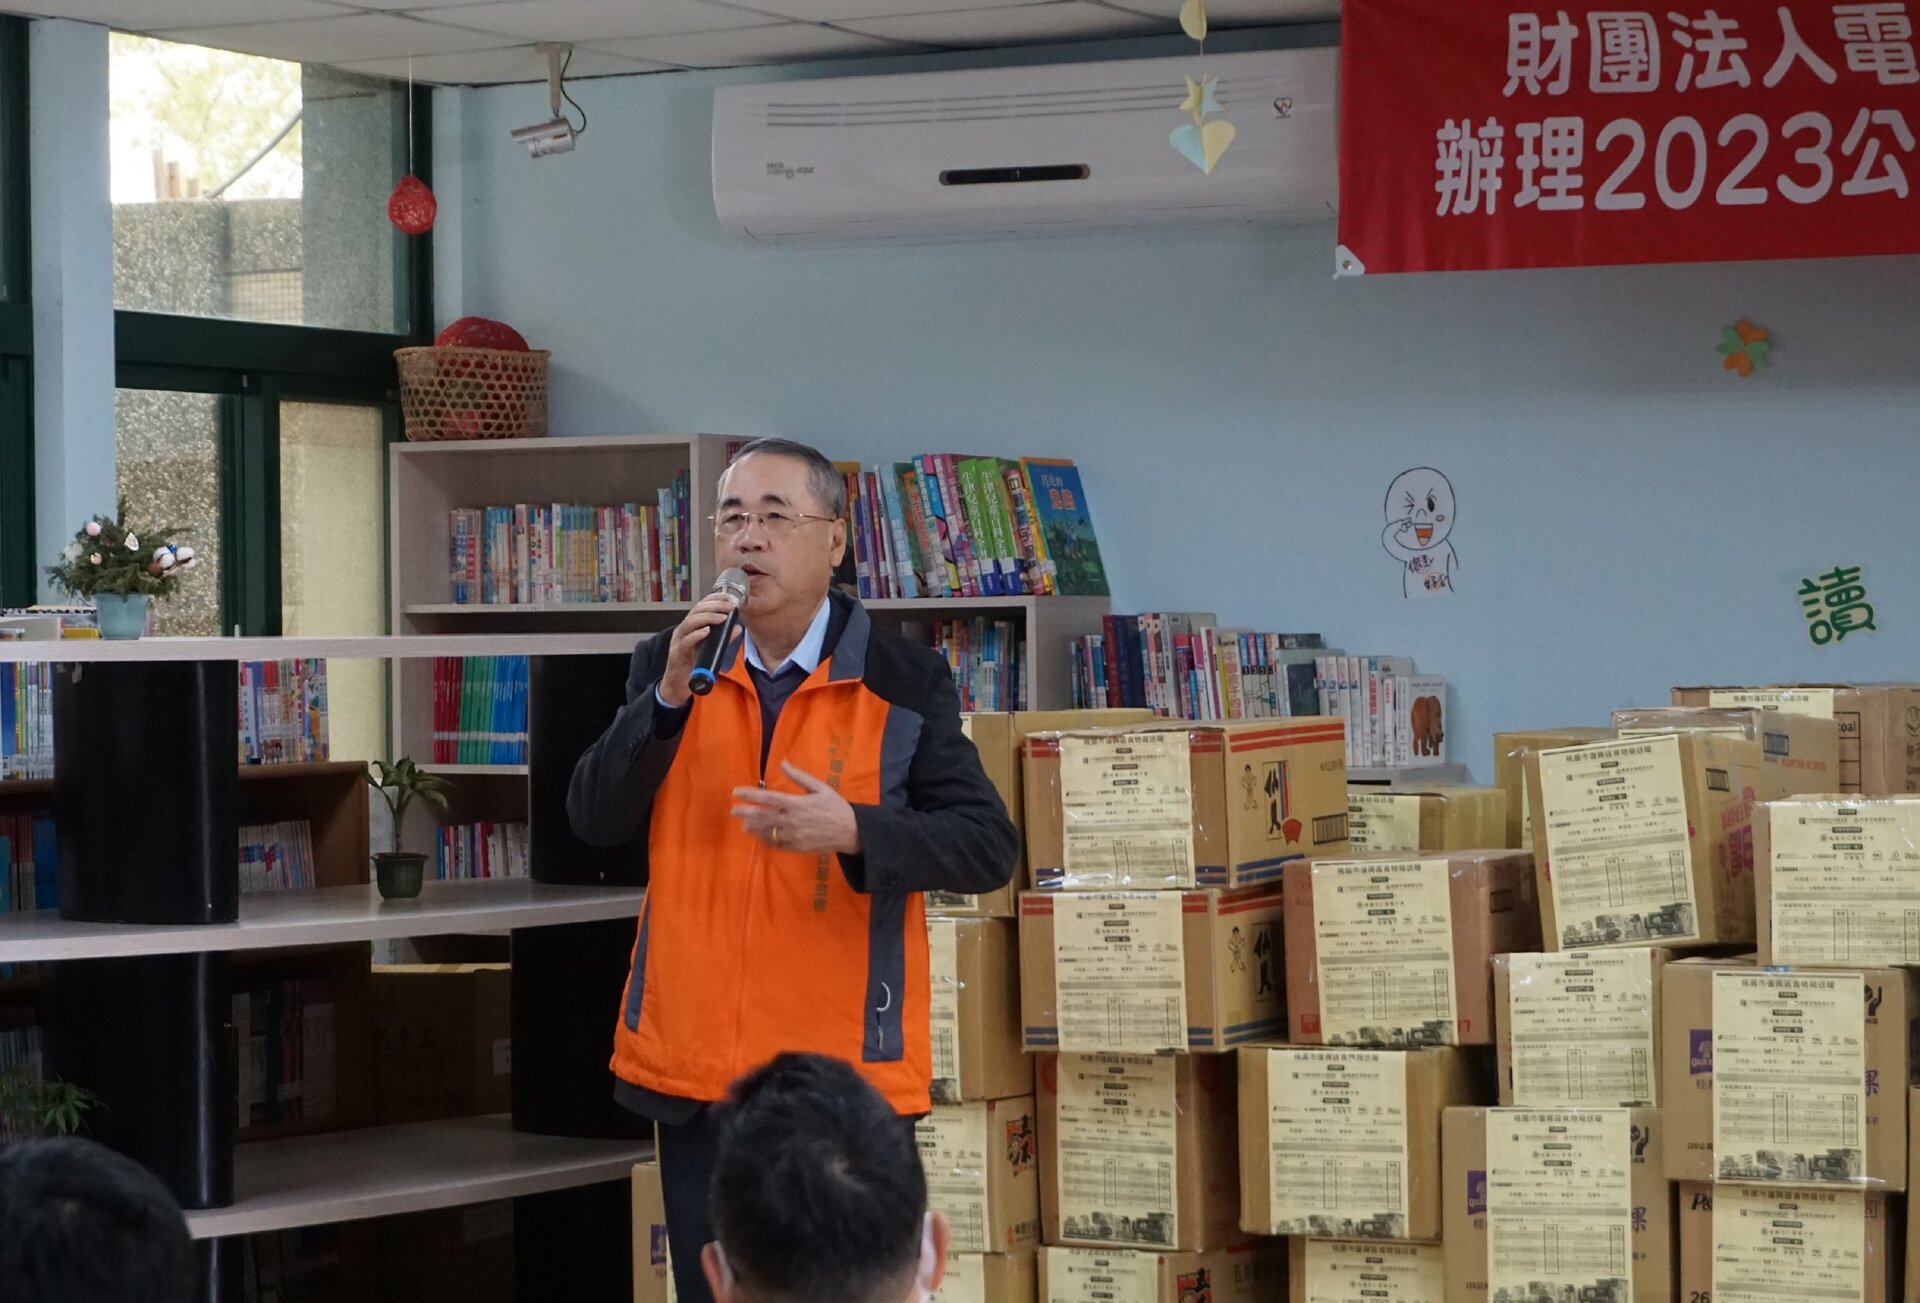 TPCF 陳正雄董事長代表TPCF捐贈食物箱予新北市社會局。